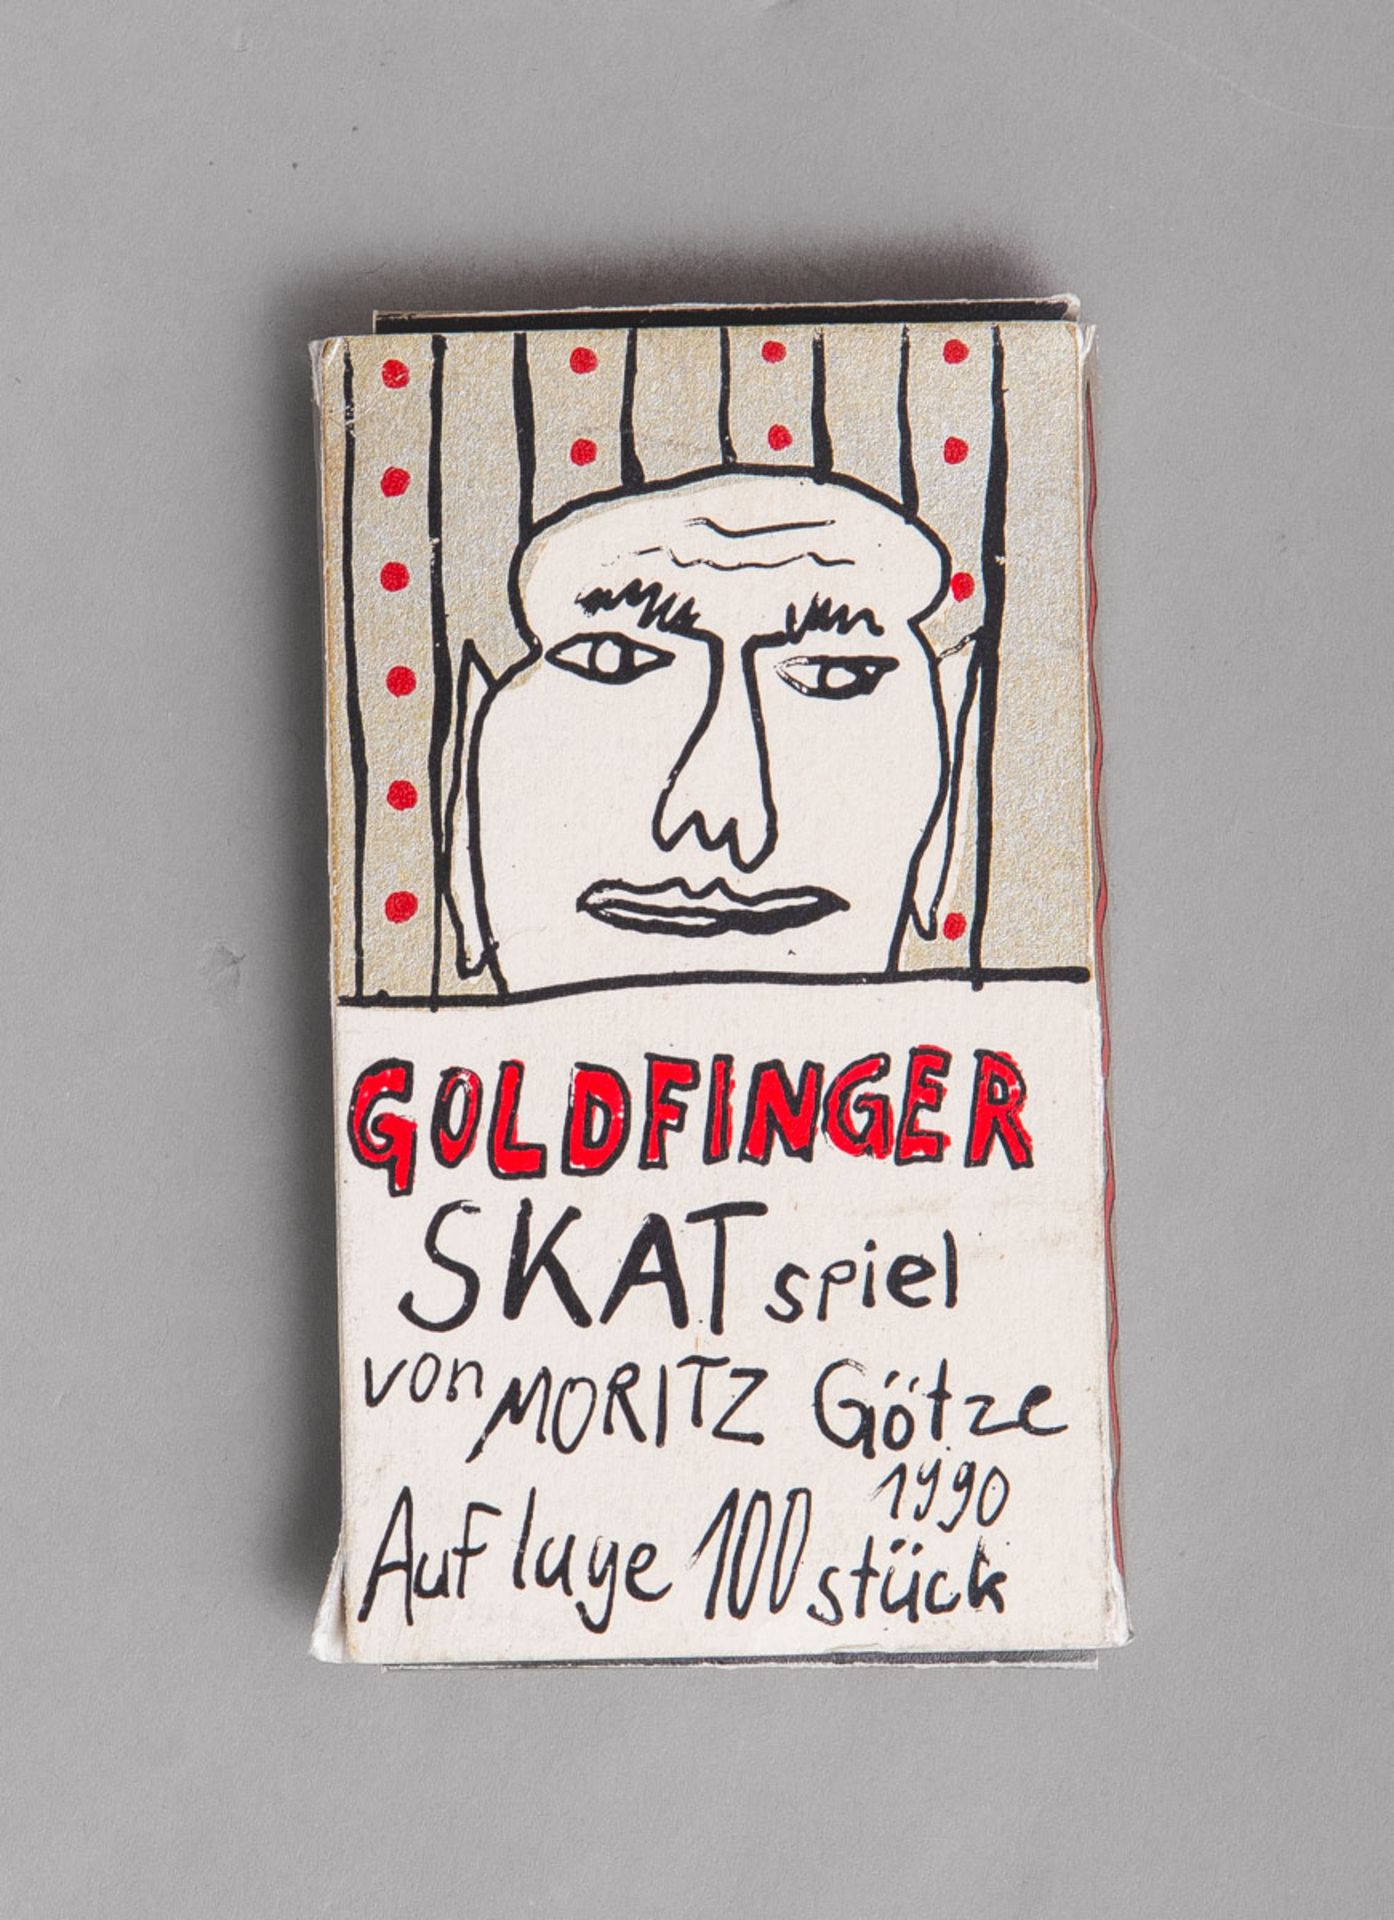 Skatspiel "Goldfinder" (Moritz Götze, 1990)